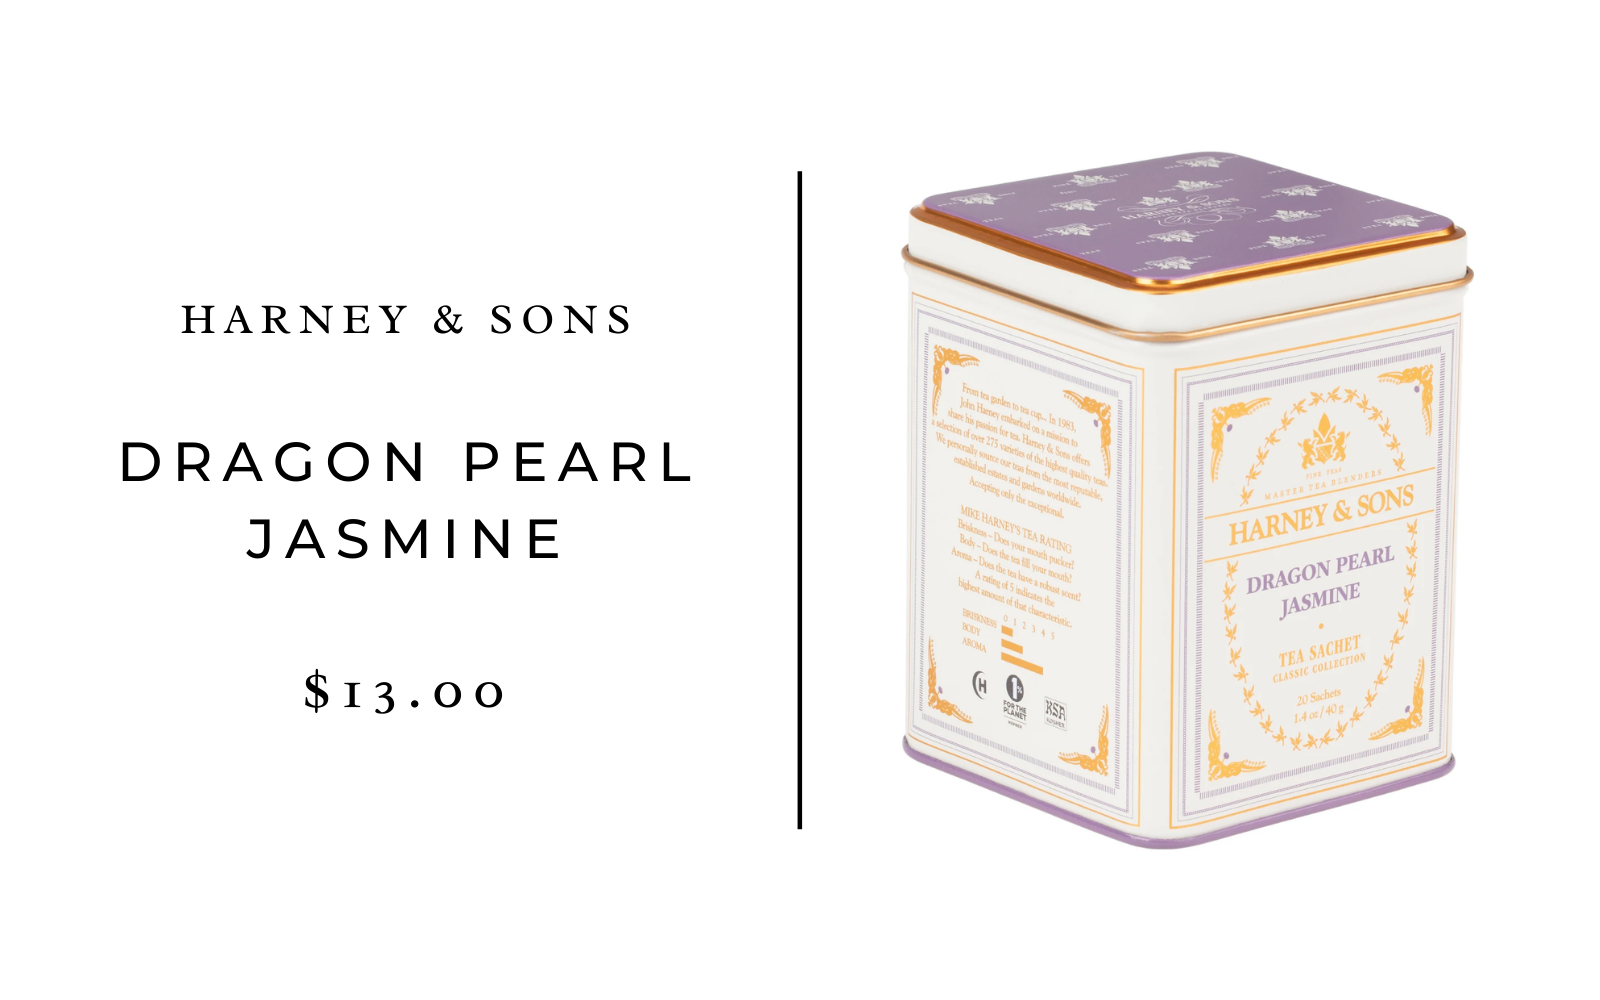 harney & sons dragon pearl jasmine